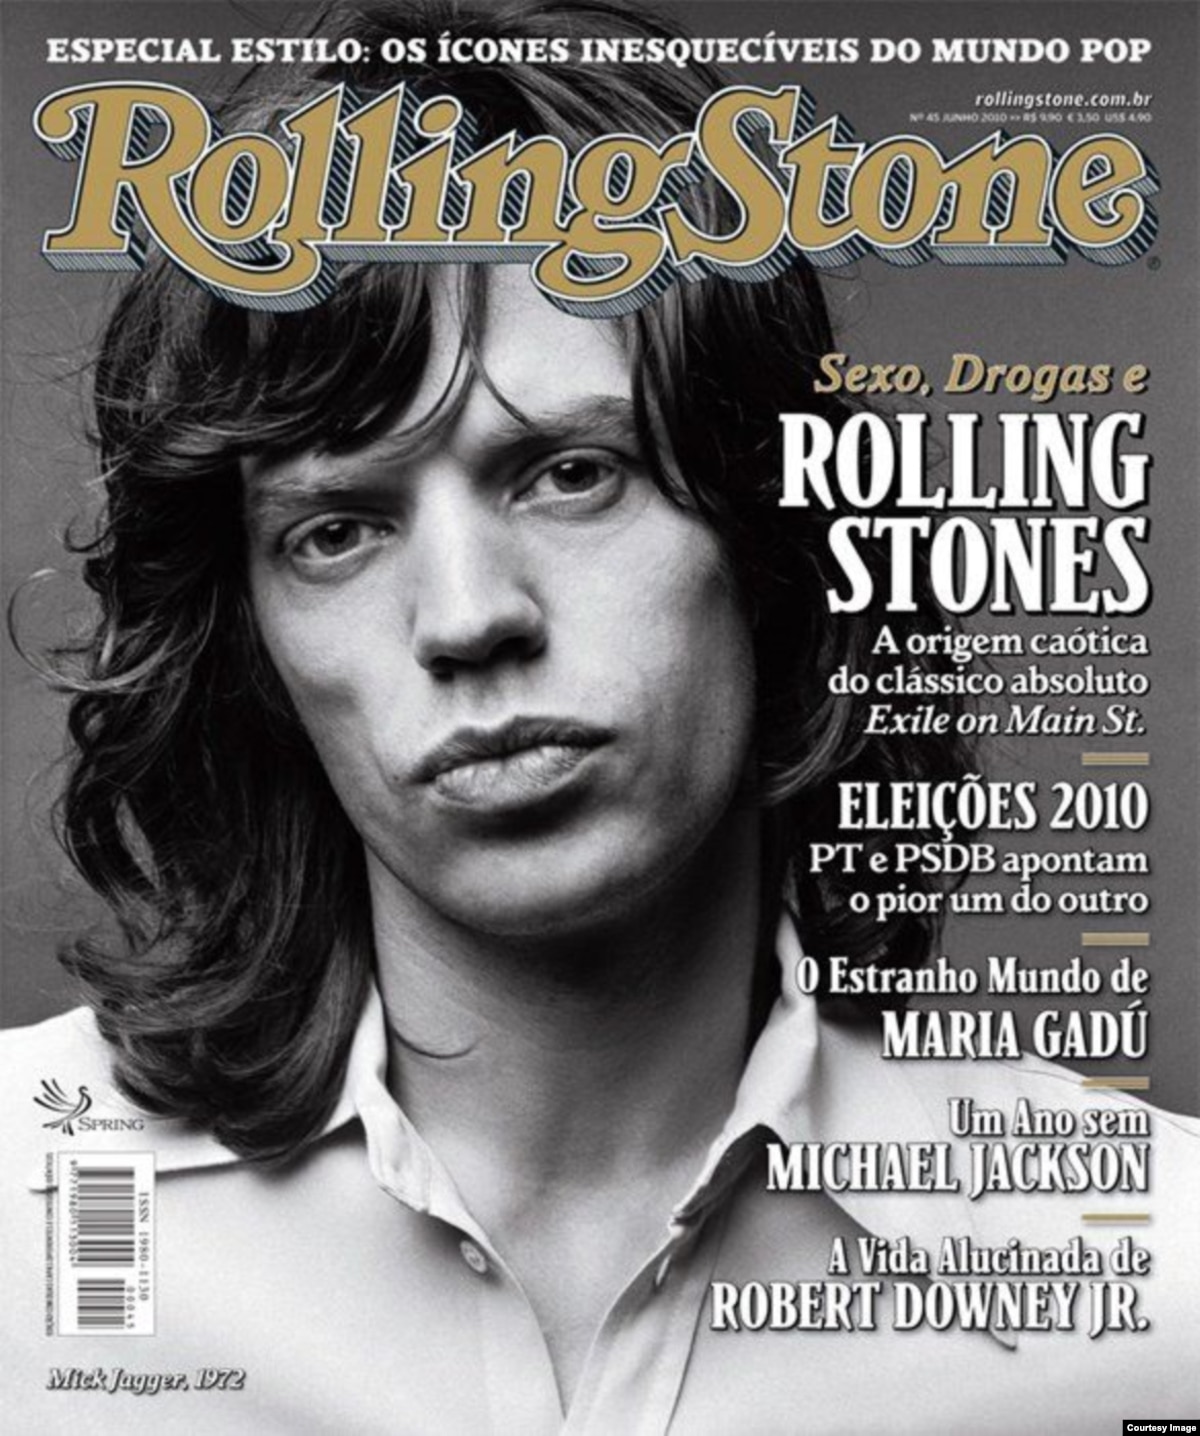 Обложки журнала Rolling Stone. Обложка журнала Роллинг стоунз. Мик Джаггер на обложке Rolling Stone. Rolling Stone (Magazine) обложки. Vk magazines